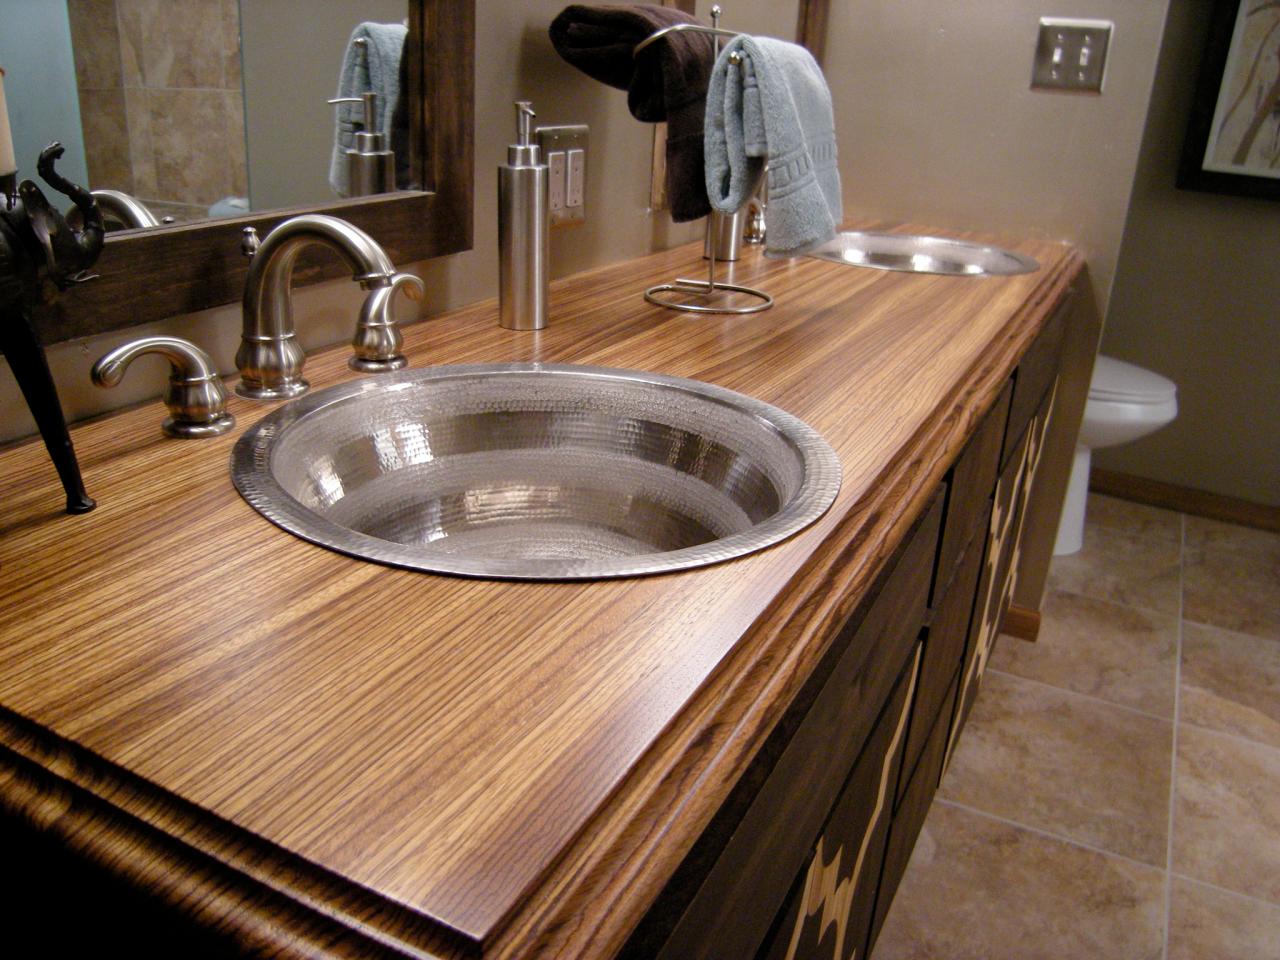 Bathroom Countertop Material Options, Vanity Top Options